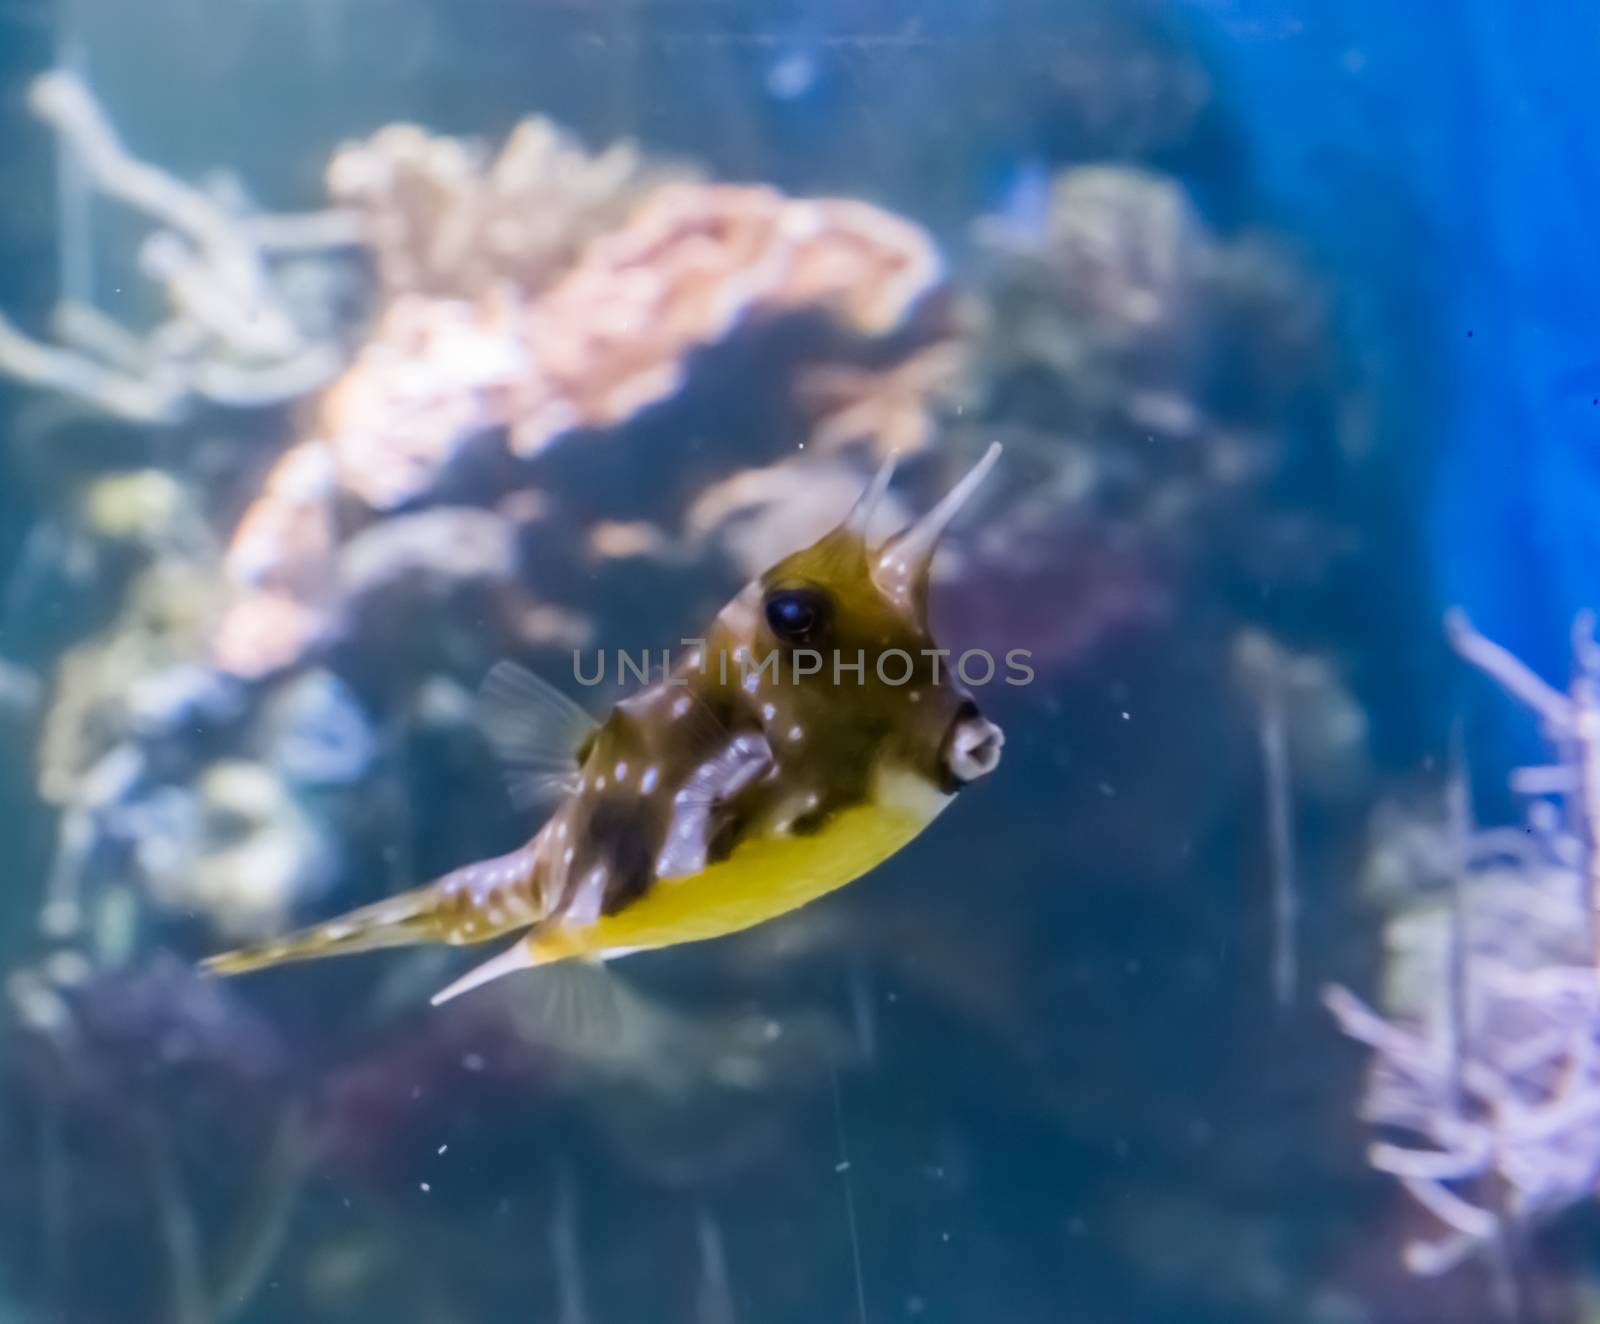 longhorn cowfish or horned boxfish a funny tropical aquarium fish pet with kissing lips a marine life portrait by charlottebleijenberg